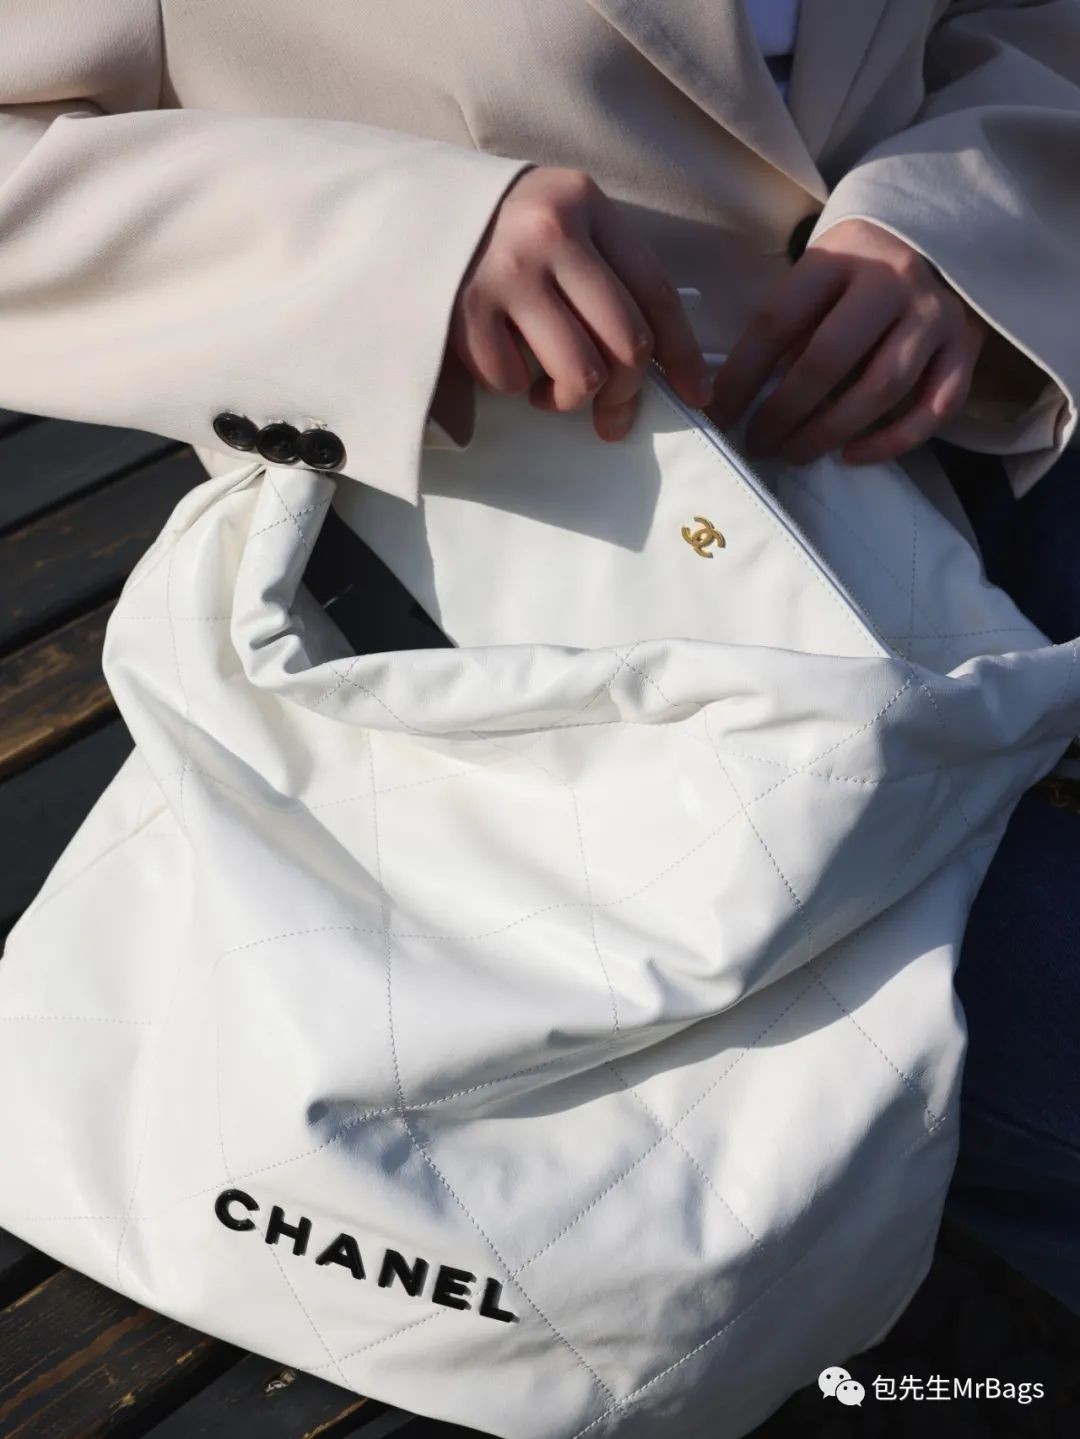 ʻO Chanel kaulana loa ʻo Chanel 22 ʻeke kiʻekiʻe kiʻekiʻe (2022 hōʻano hou ʻia)-Best Quality Fake Louis Vuitton Bag Online Store, Replica designer bag ru